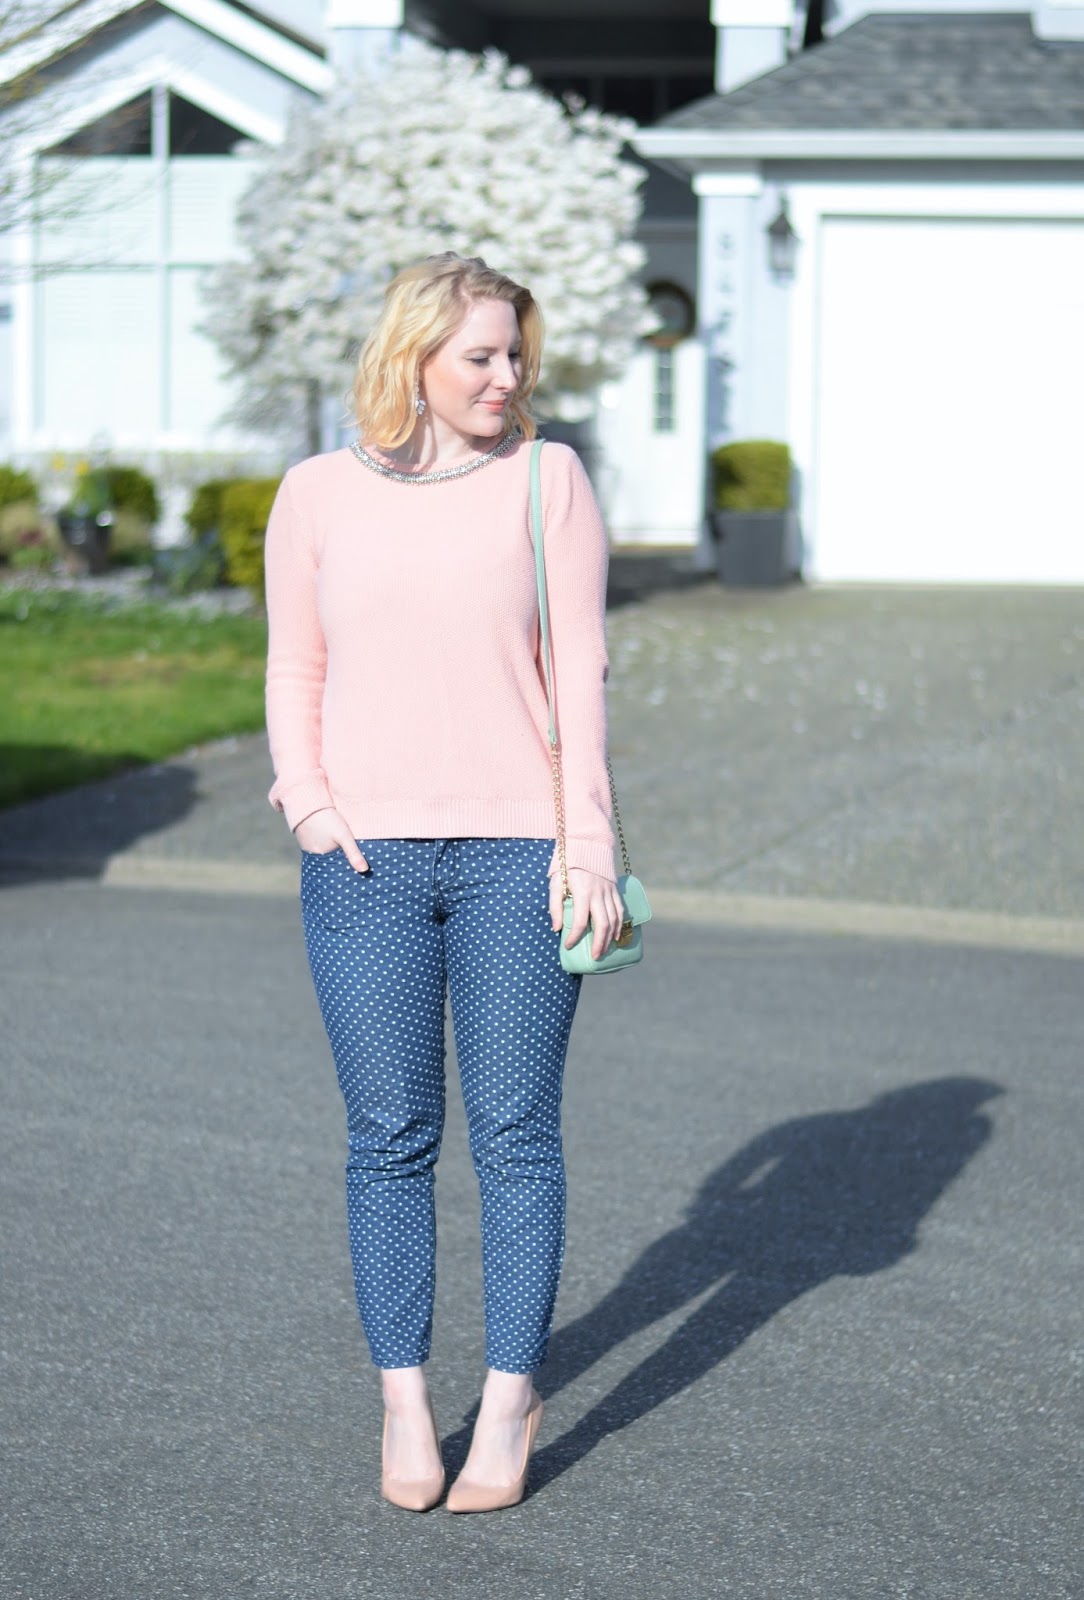 Vancouver Vogue: Why Everyone Should Own Polka Dot Pants